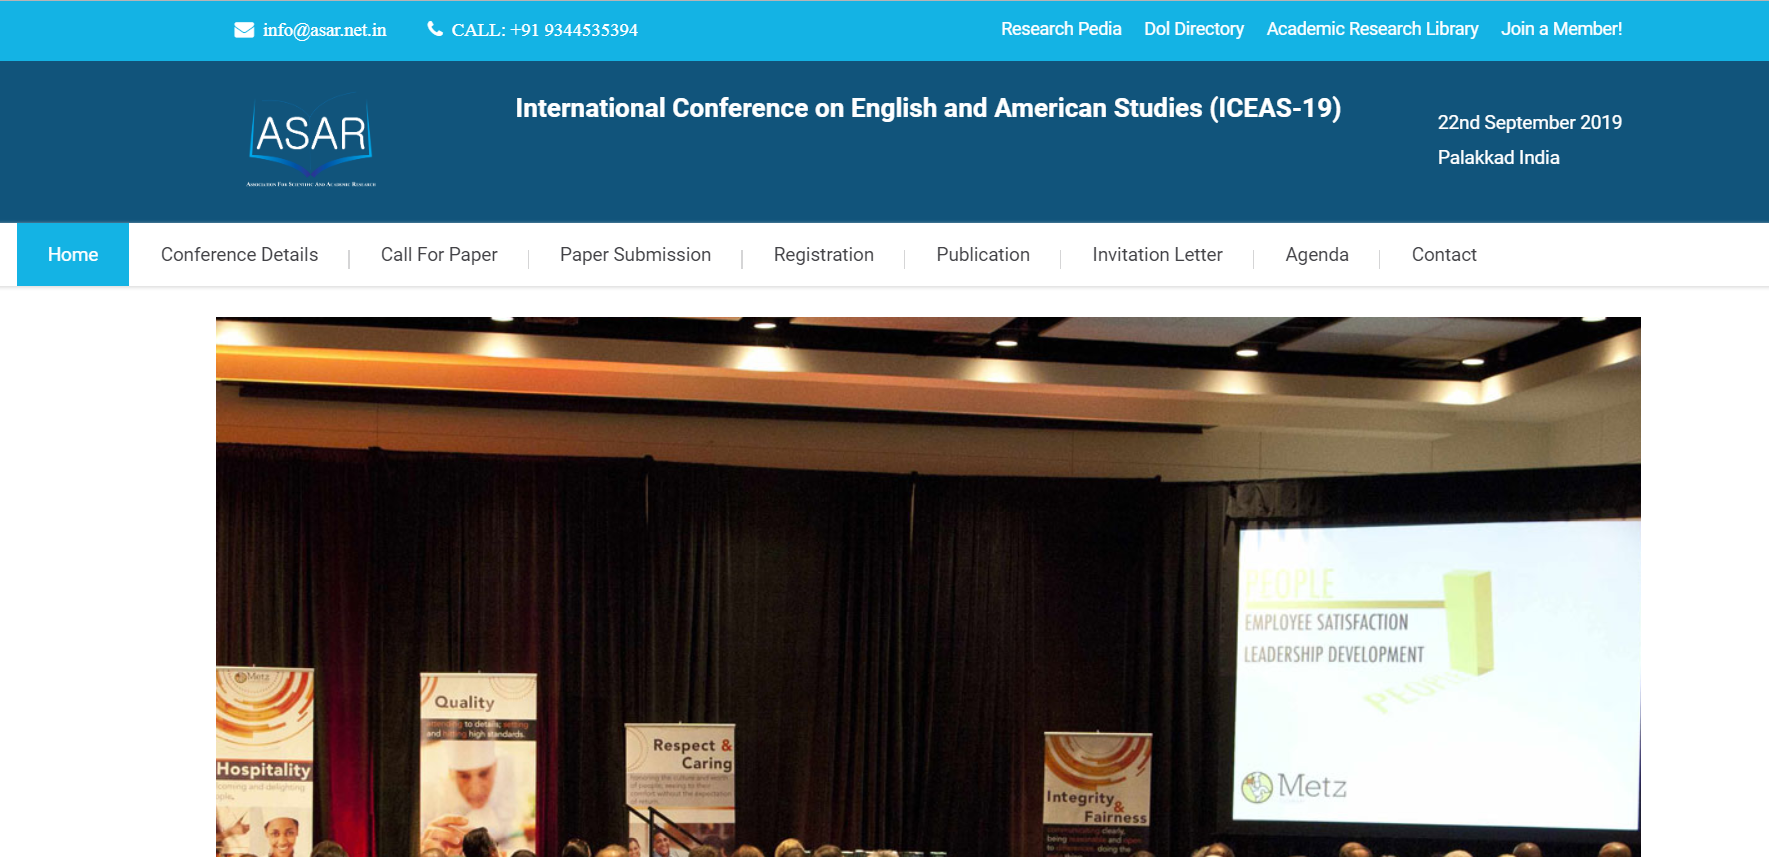 International Conference on English and American Studies (ICEAS-19), Palakkad, Kerala, India